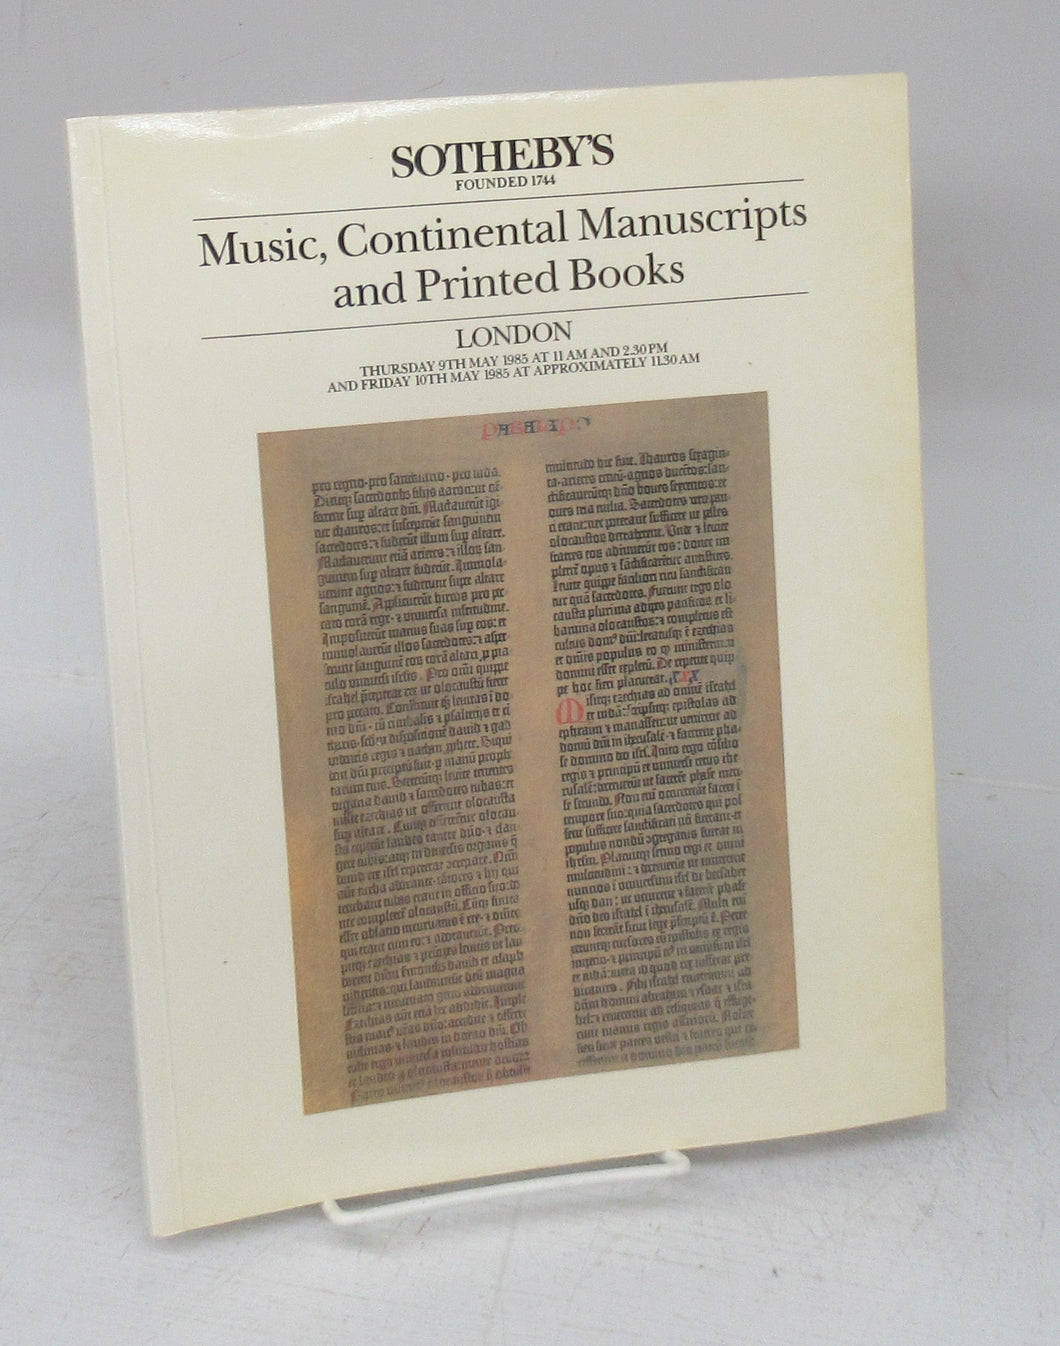 Music, Continental Manuscripts and Printed Books, May 1985